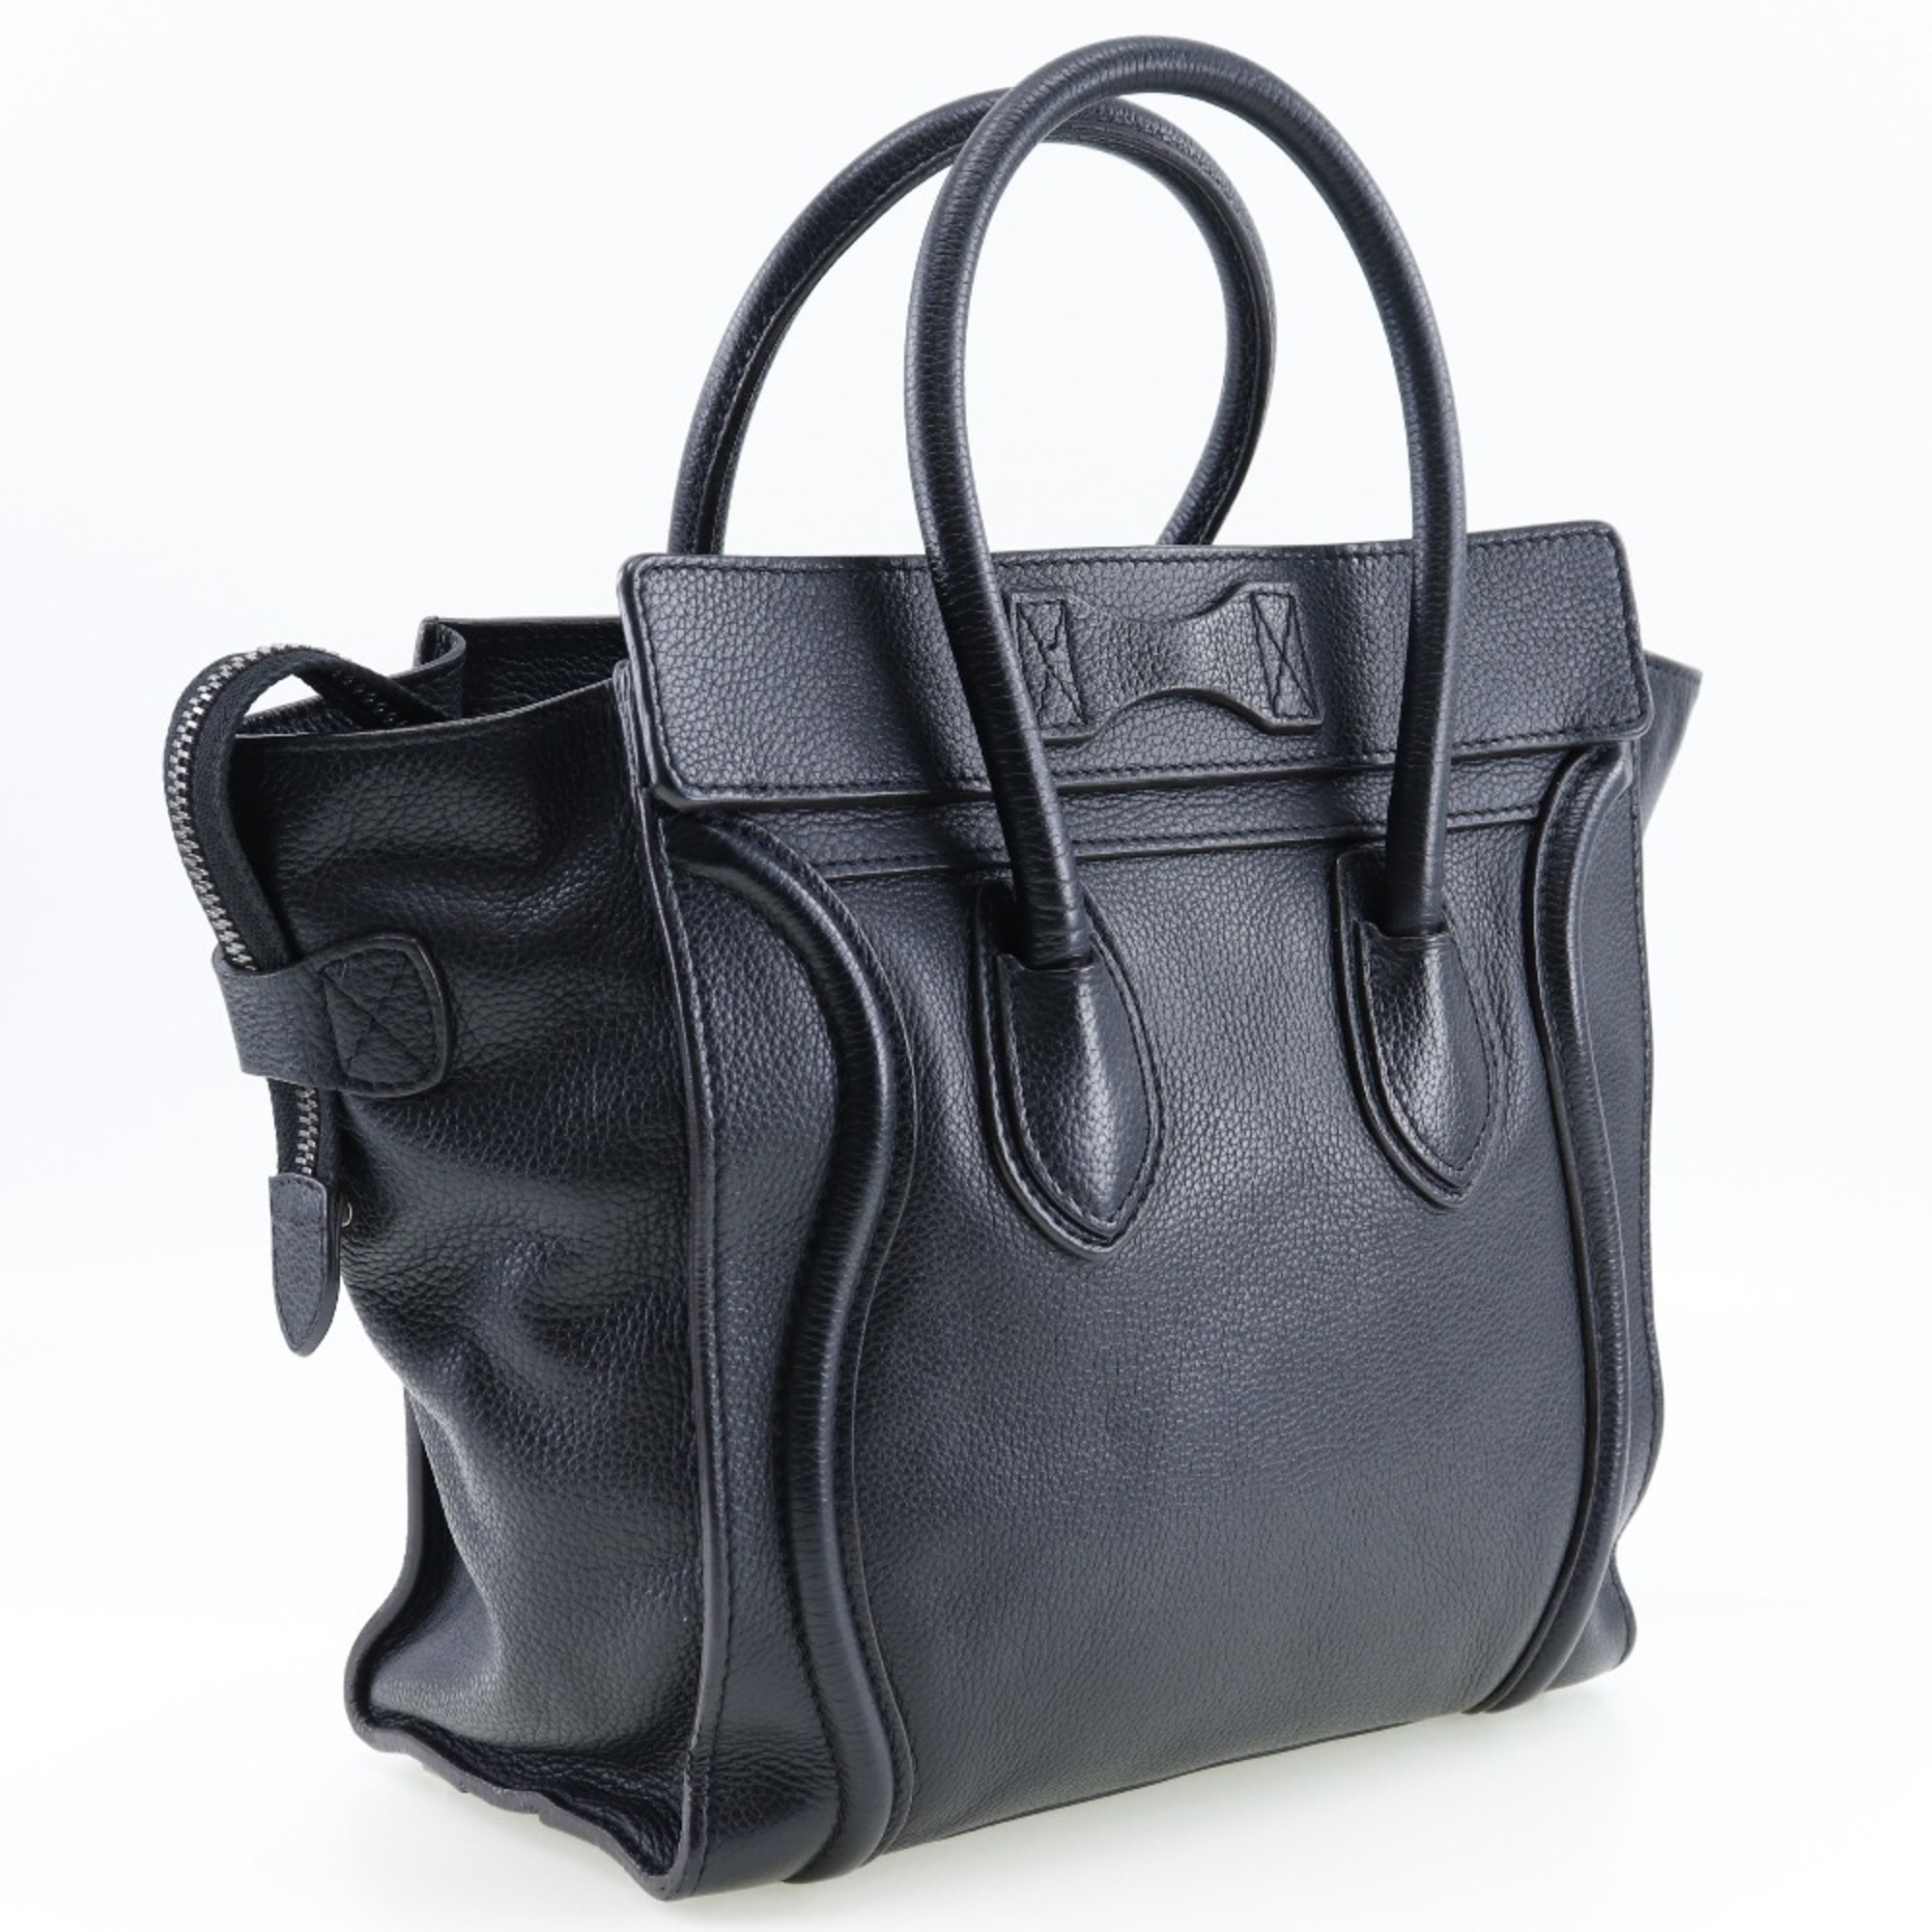 Celine CELINE Luggage Handbag Micro Shopper 167793 Calf Made in Italy Black A5 Zipper Women's